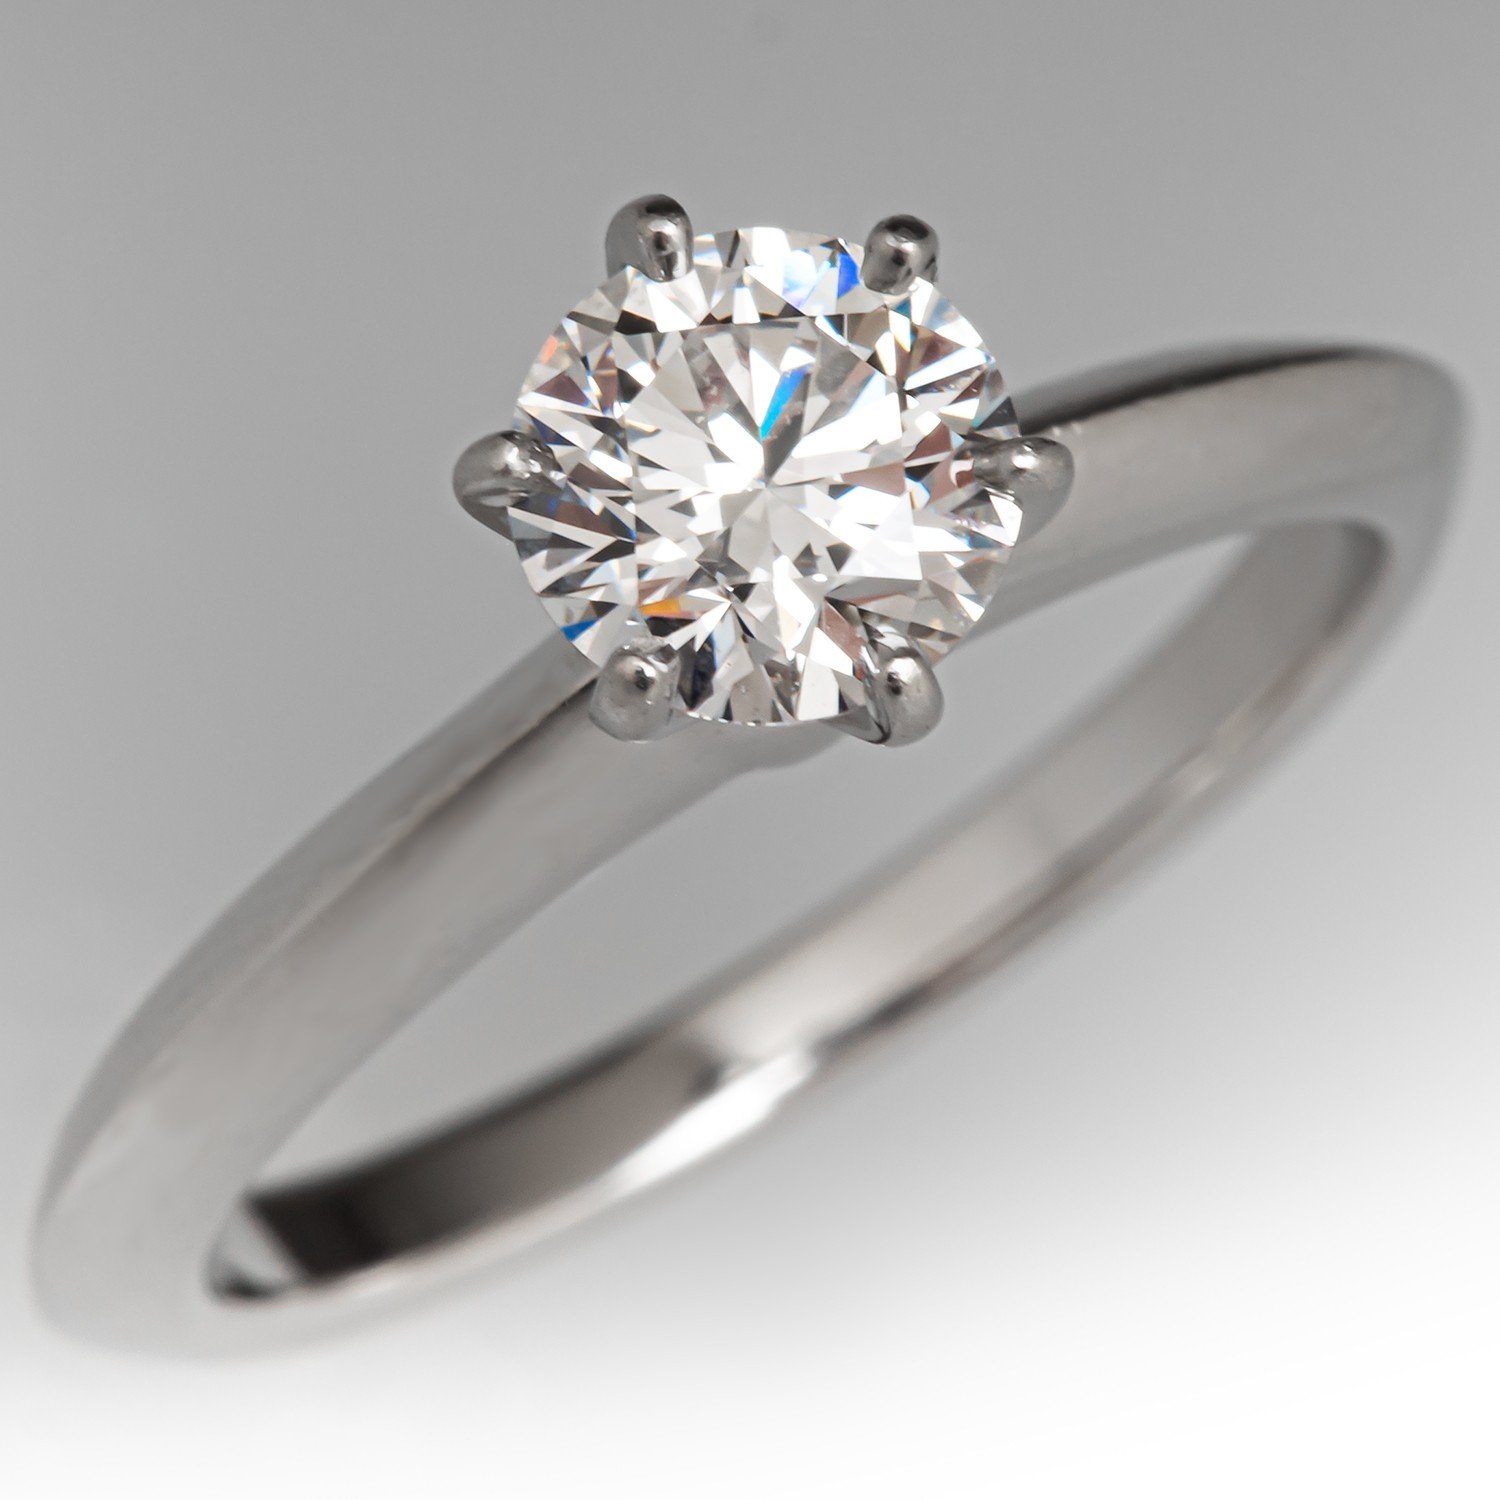 Tiffany Trump 'Upgraded' Engagement Ring For Wedding – Hollywood Life